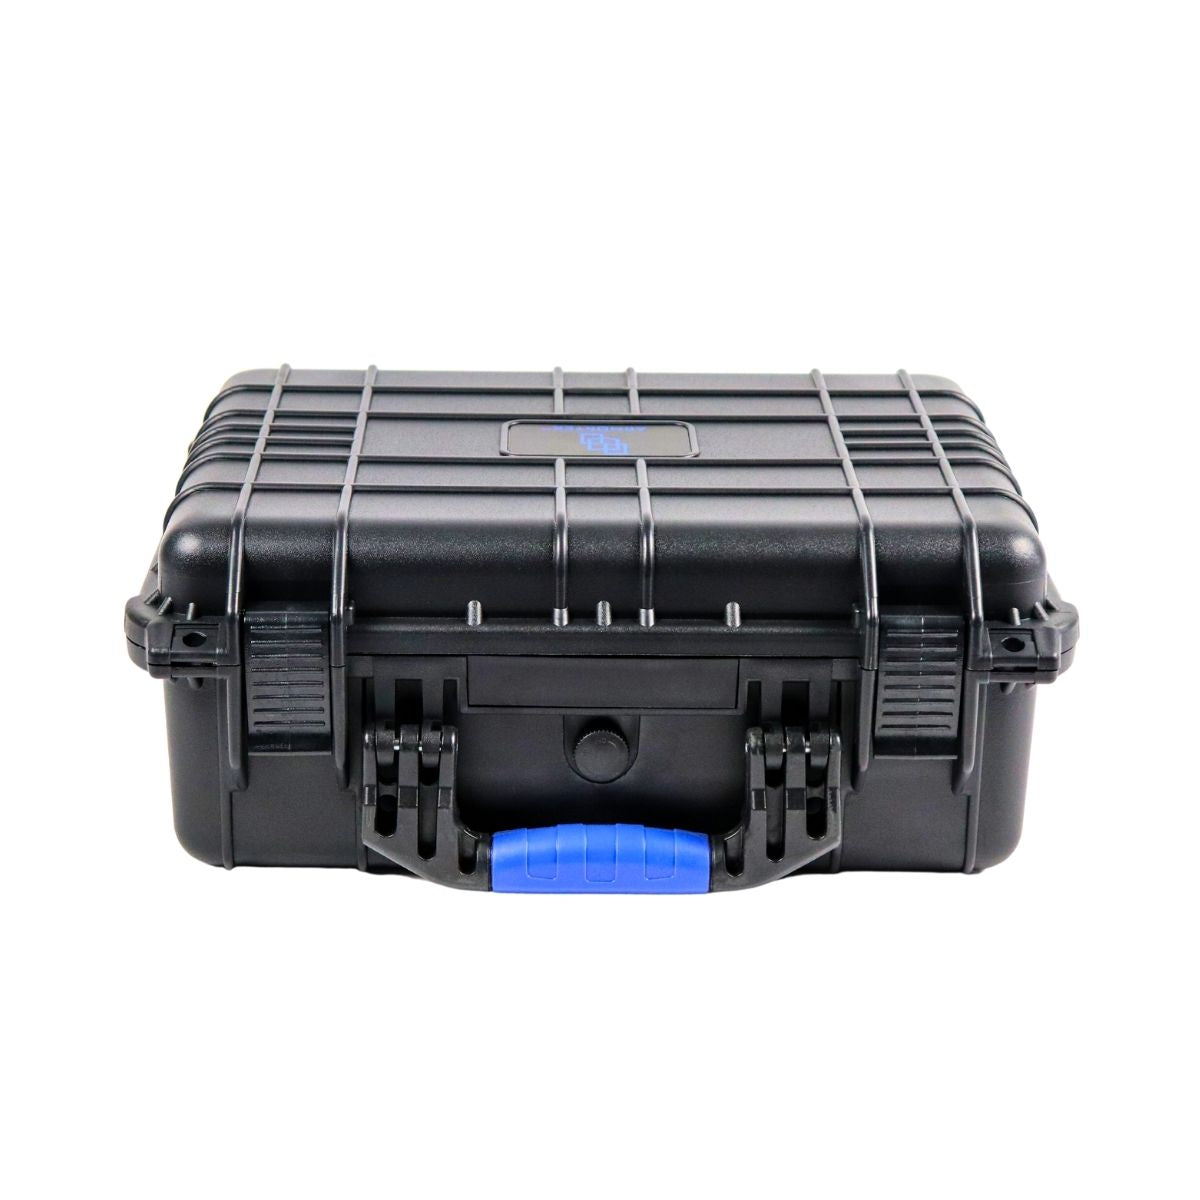 Armortek Z3 Pro Waterproof Slab Case for PSA, CGC, SGC and more!